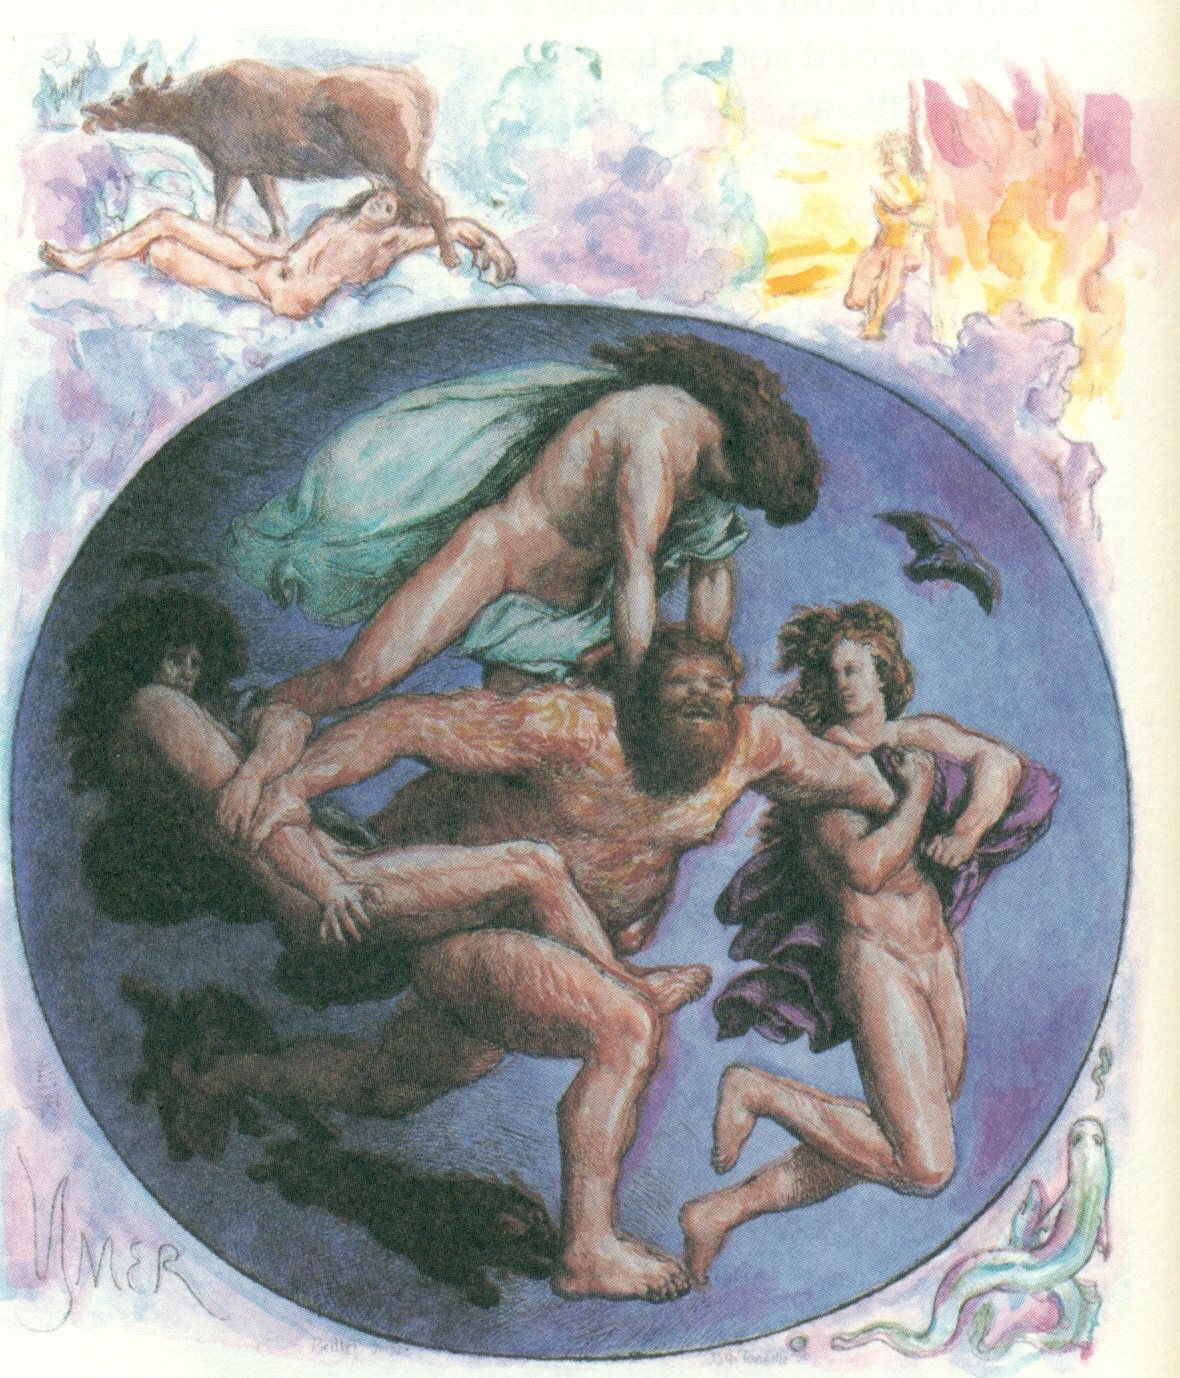 Odin, Vili, and Ve, kill the giant Ymir, illustration by Lorenz Frølich, date unknown.